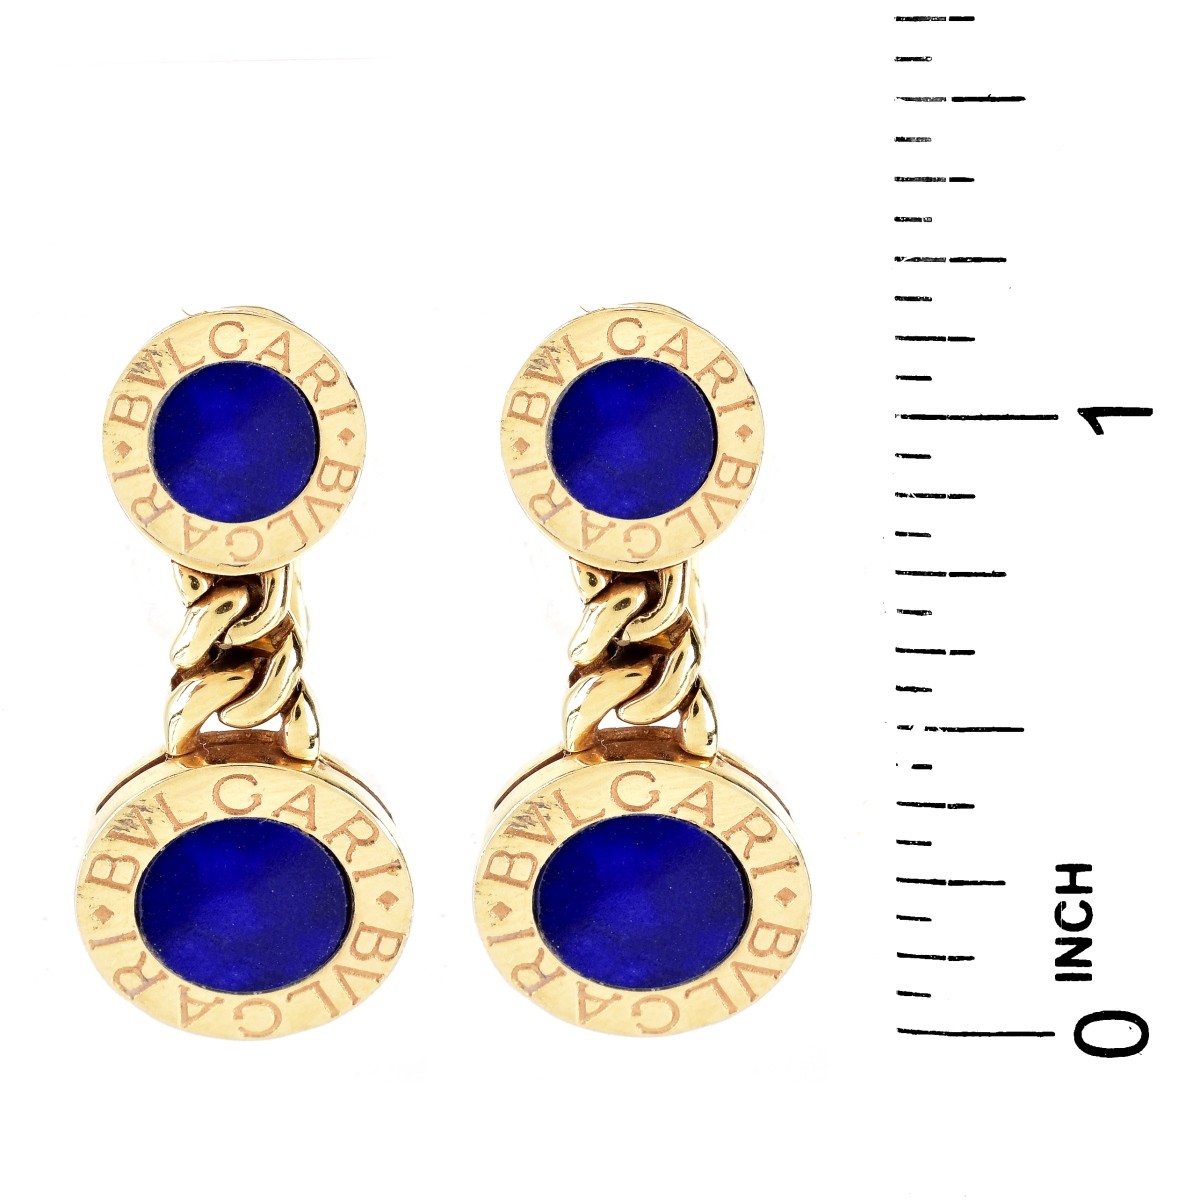 Bulgari 18K Gold and Lapis Earrings